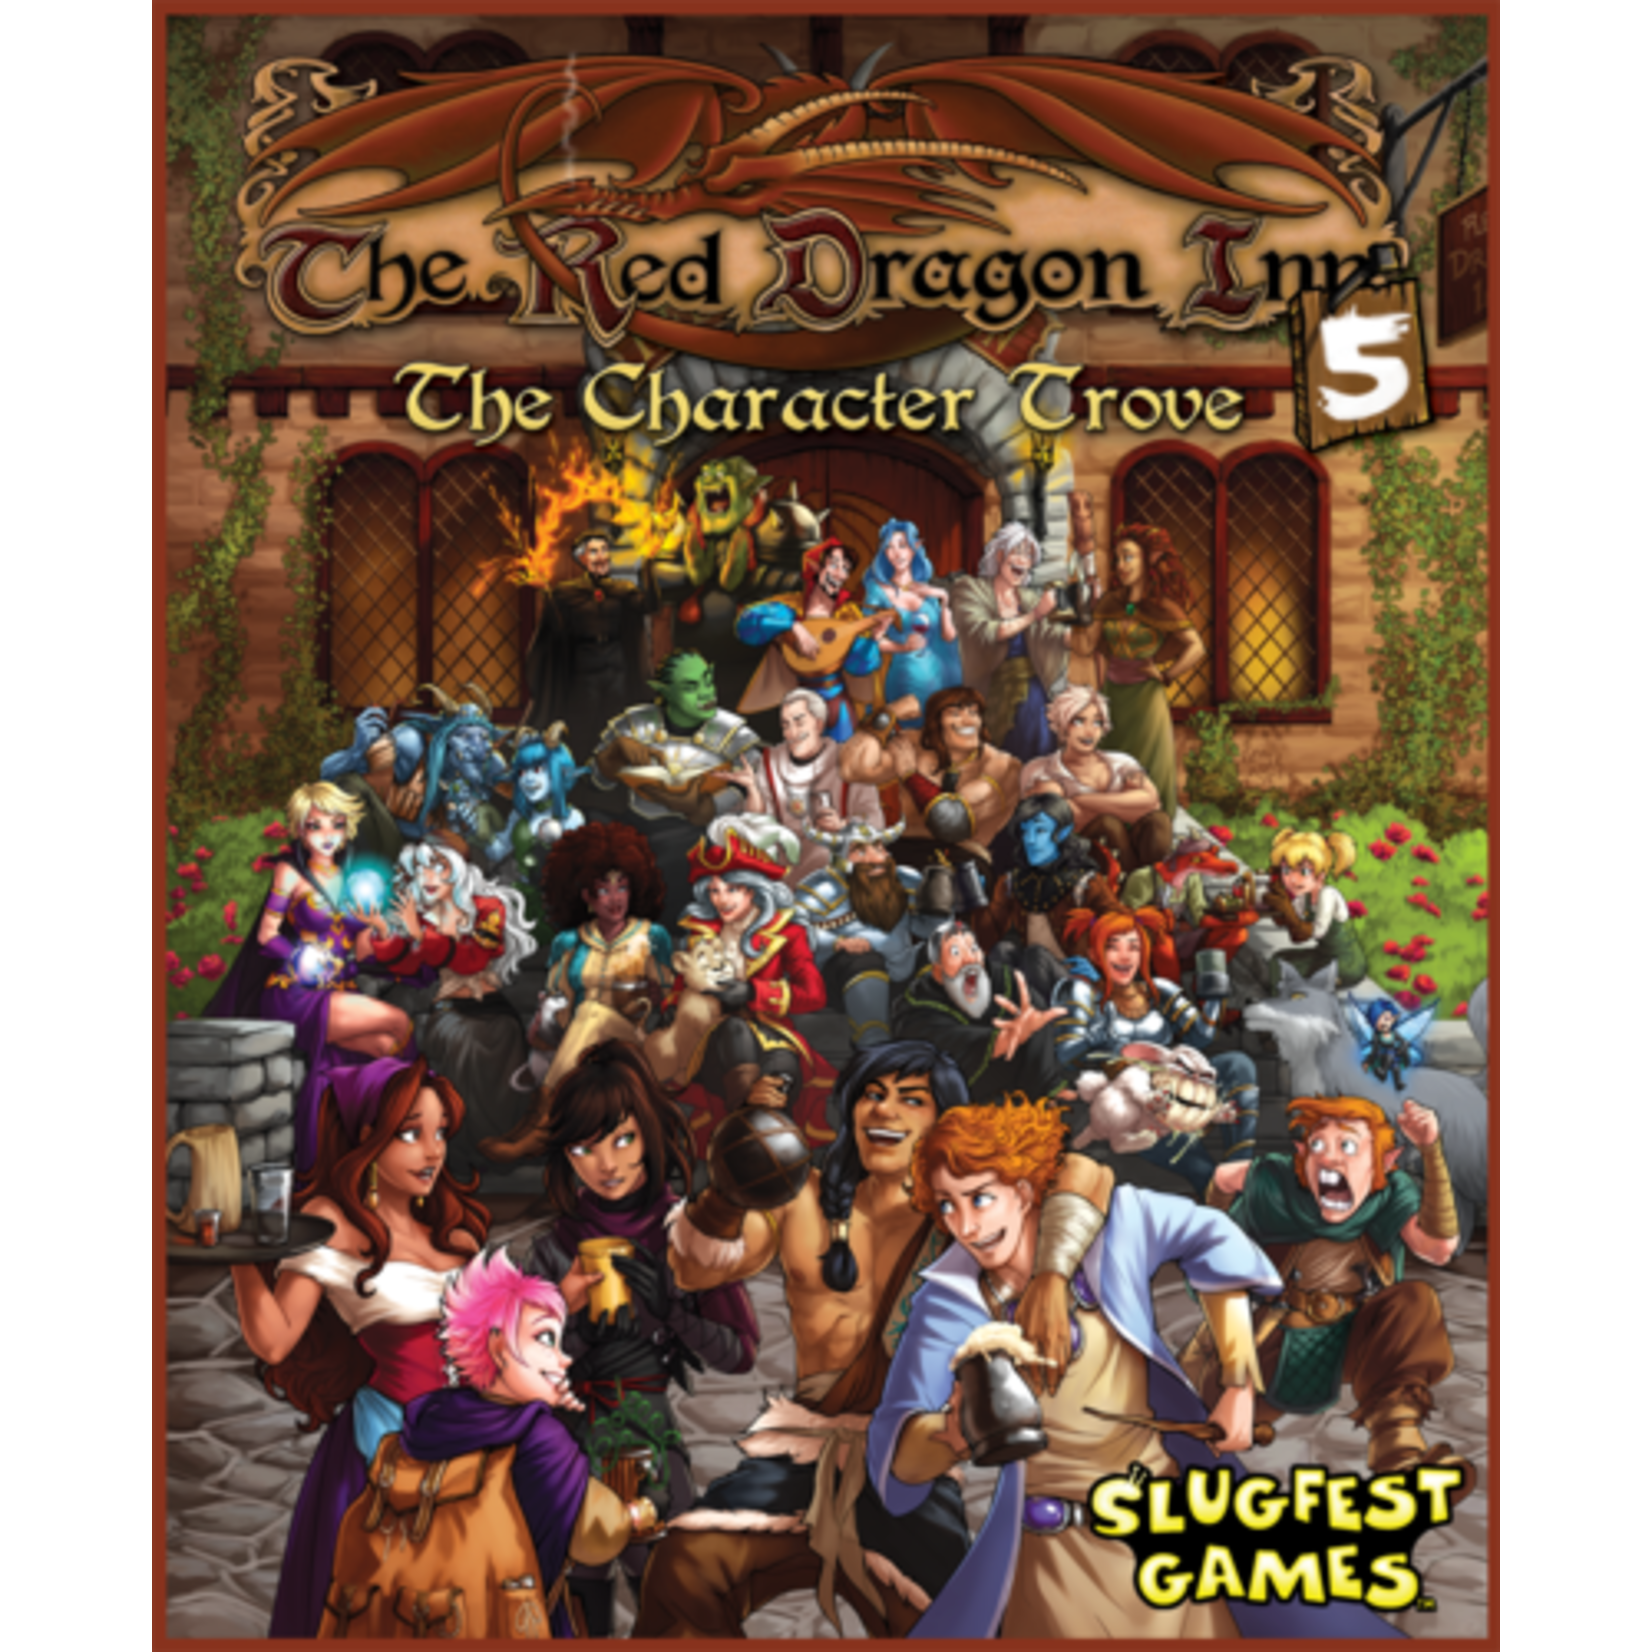 Slugfest Games Red Dragon Inn 5 The Character Trove